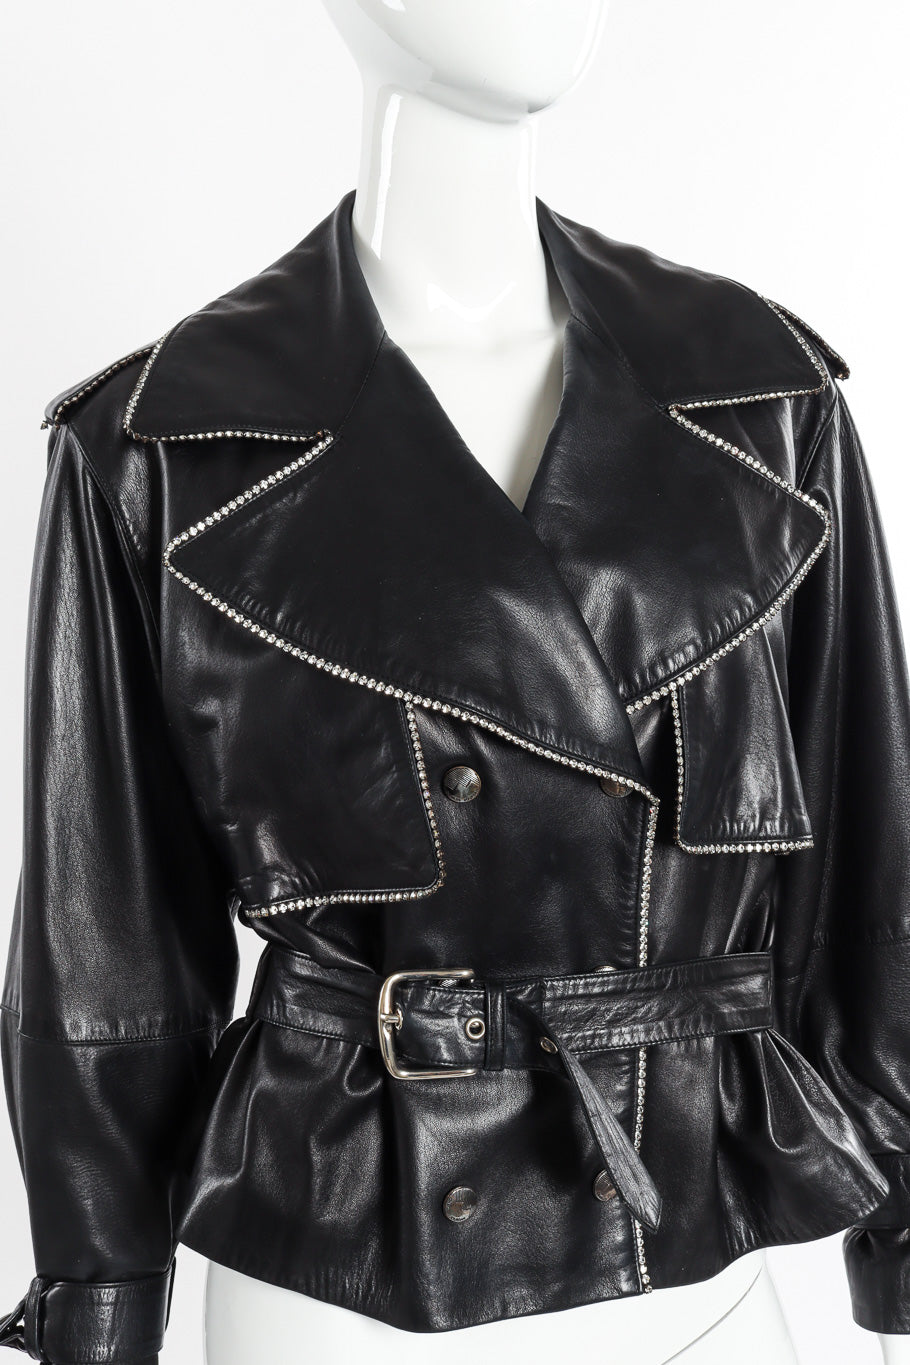 Vintage Charles Jourdan Leather Rhinestone Jacket front on mannequin closeup @recessla